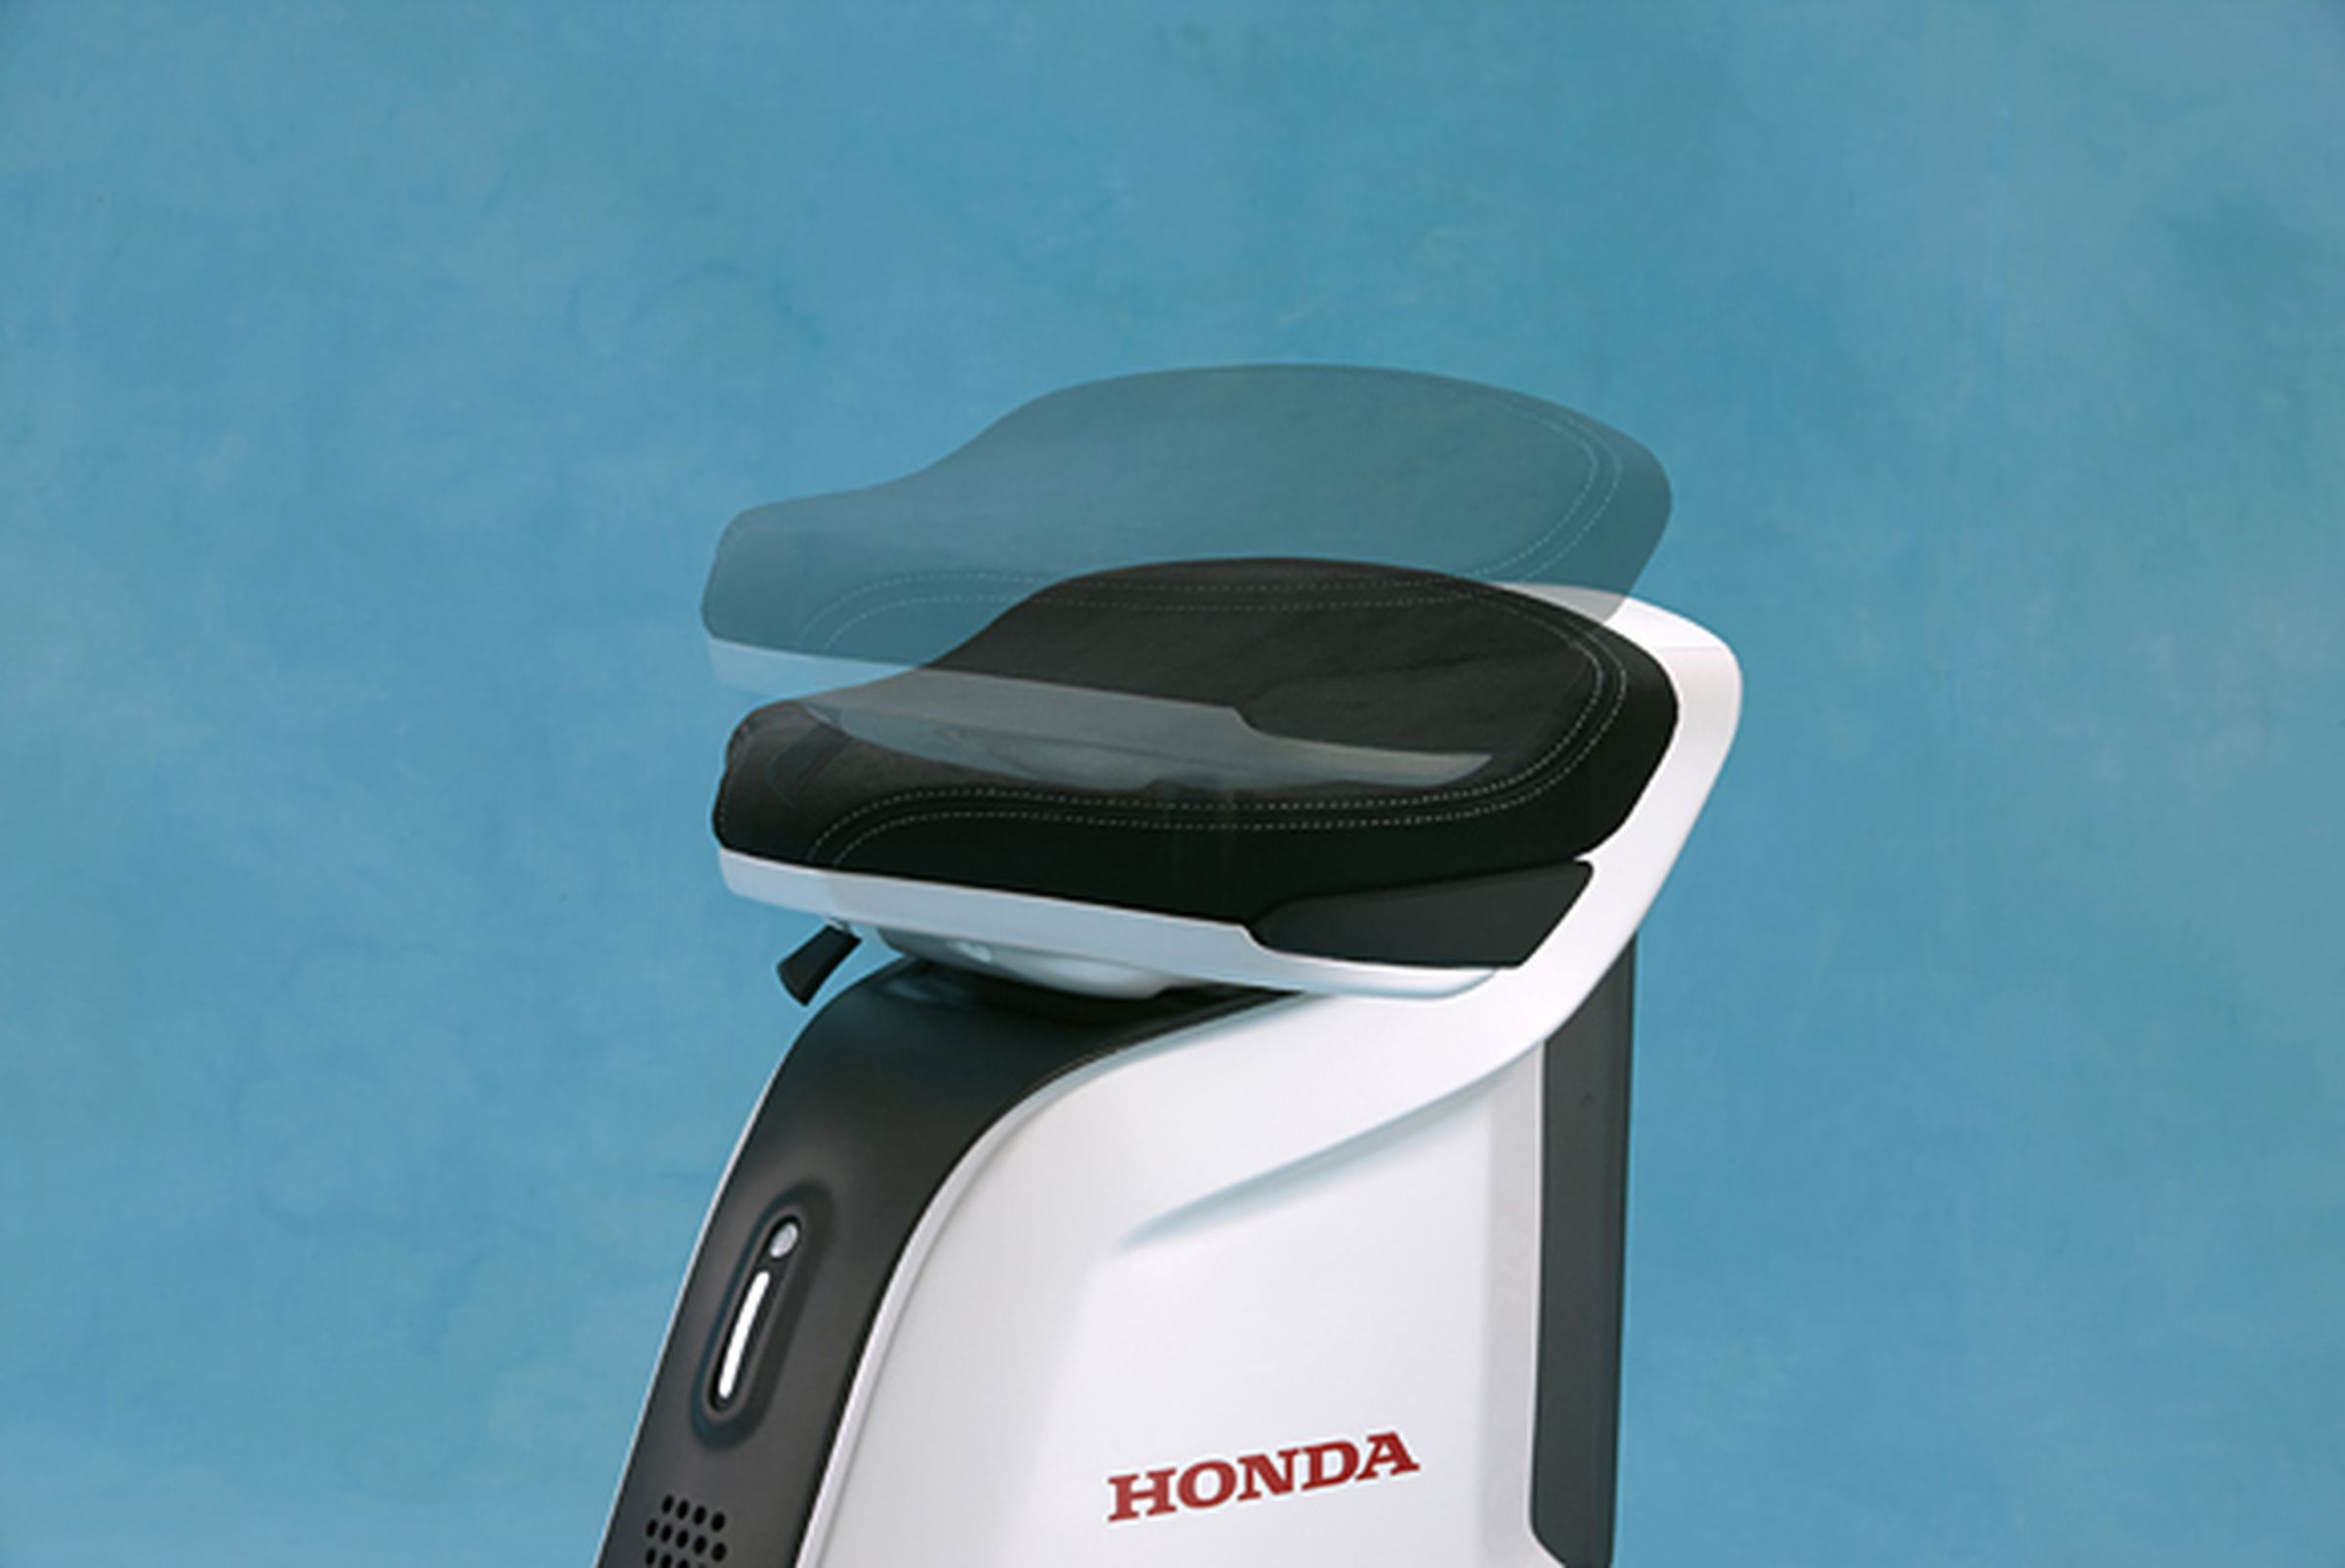 Honda Uni-Cub personal mobility device press pictures